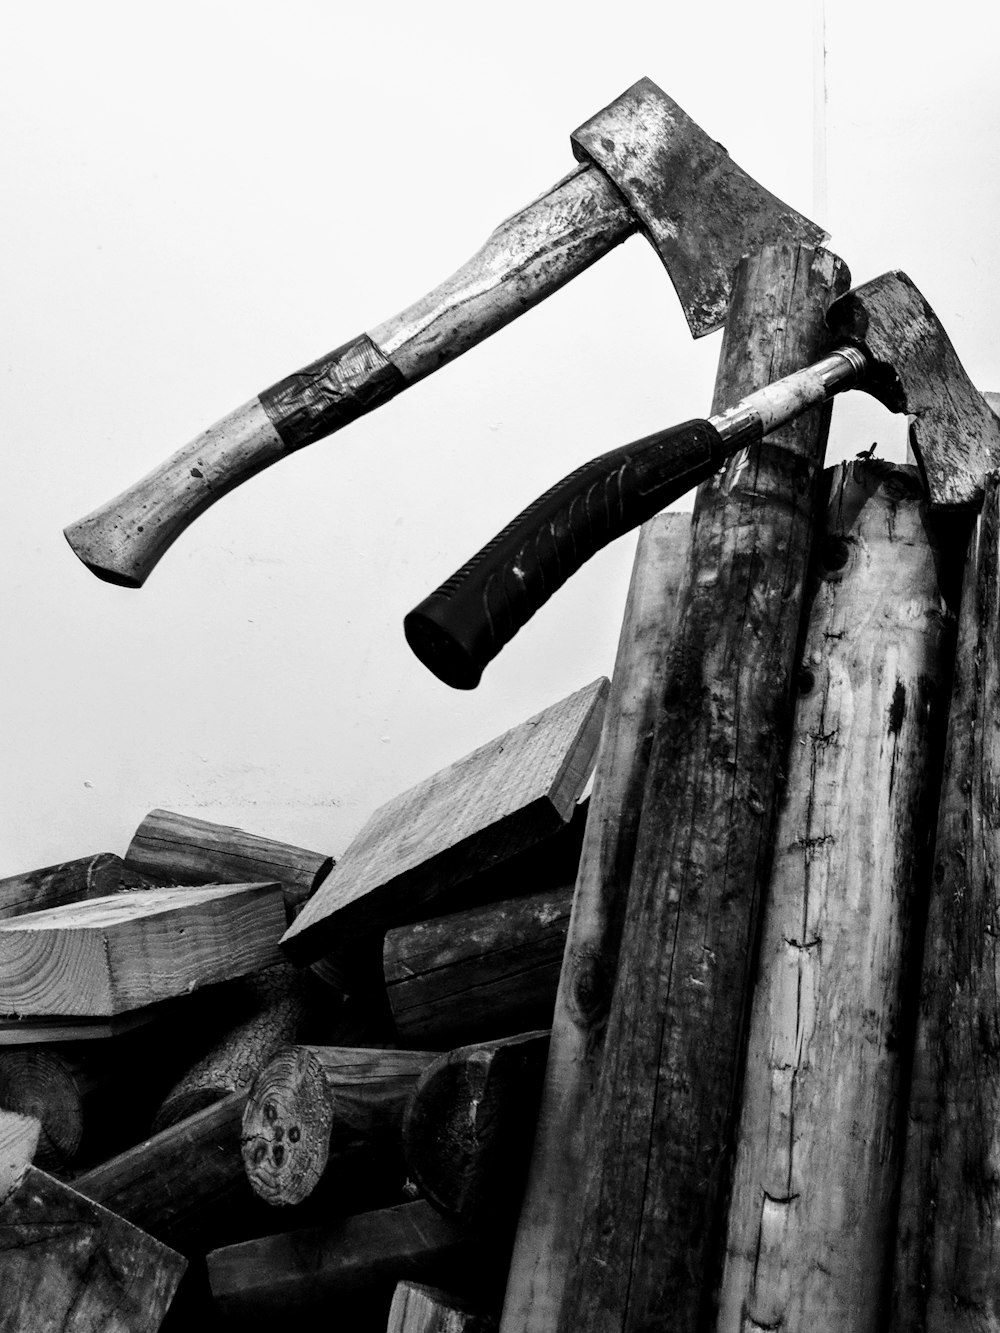 axe on wood